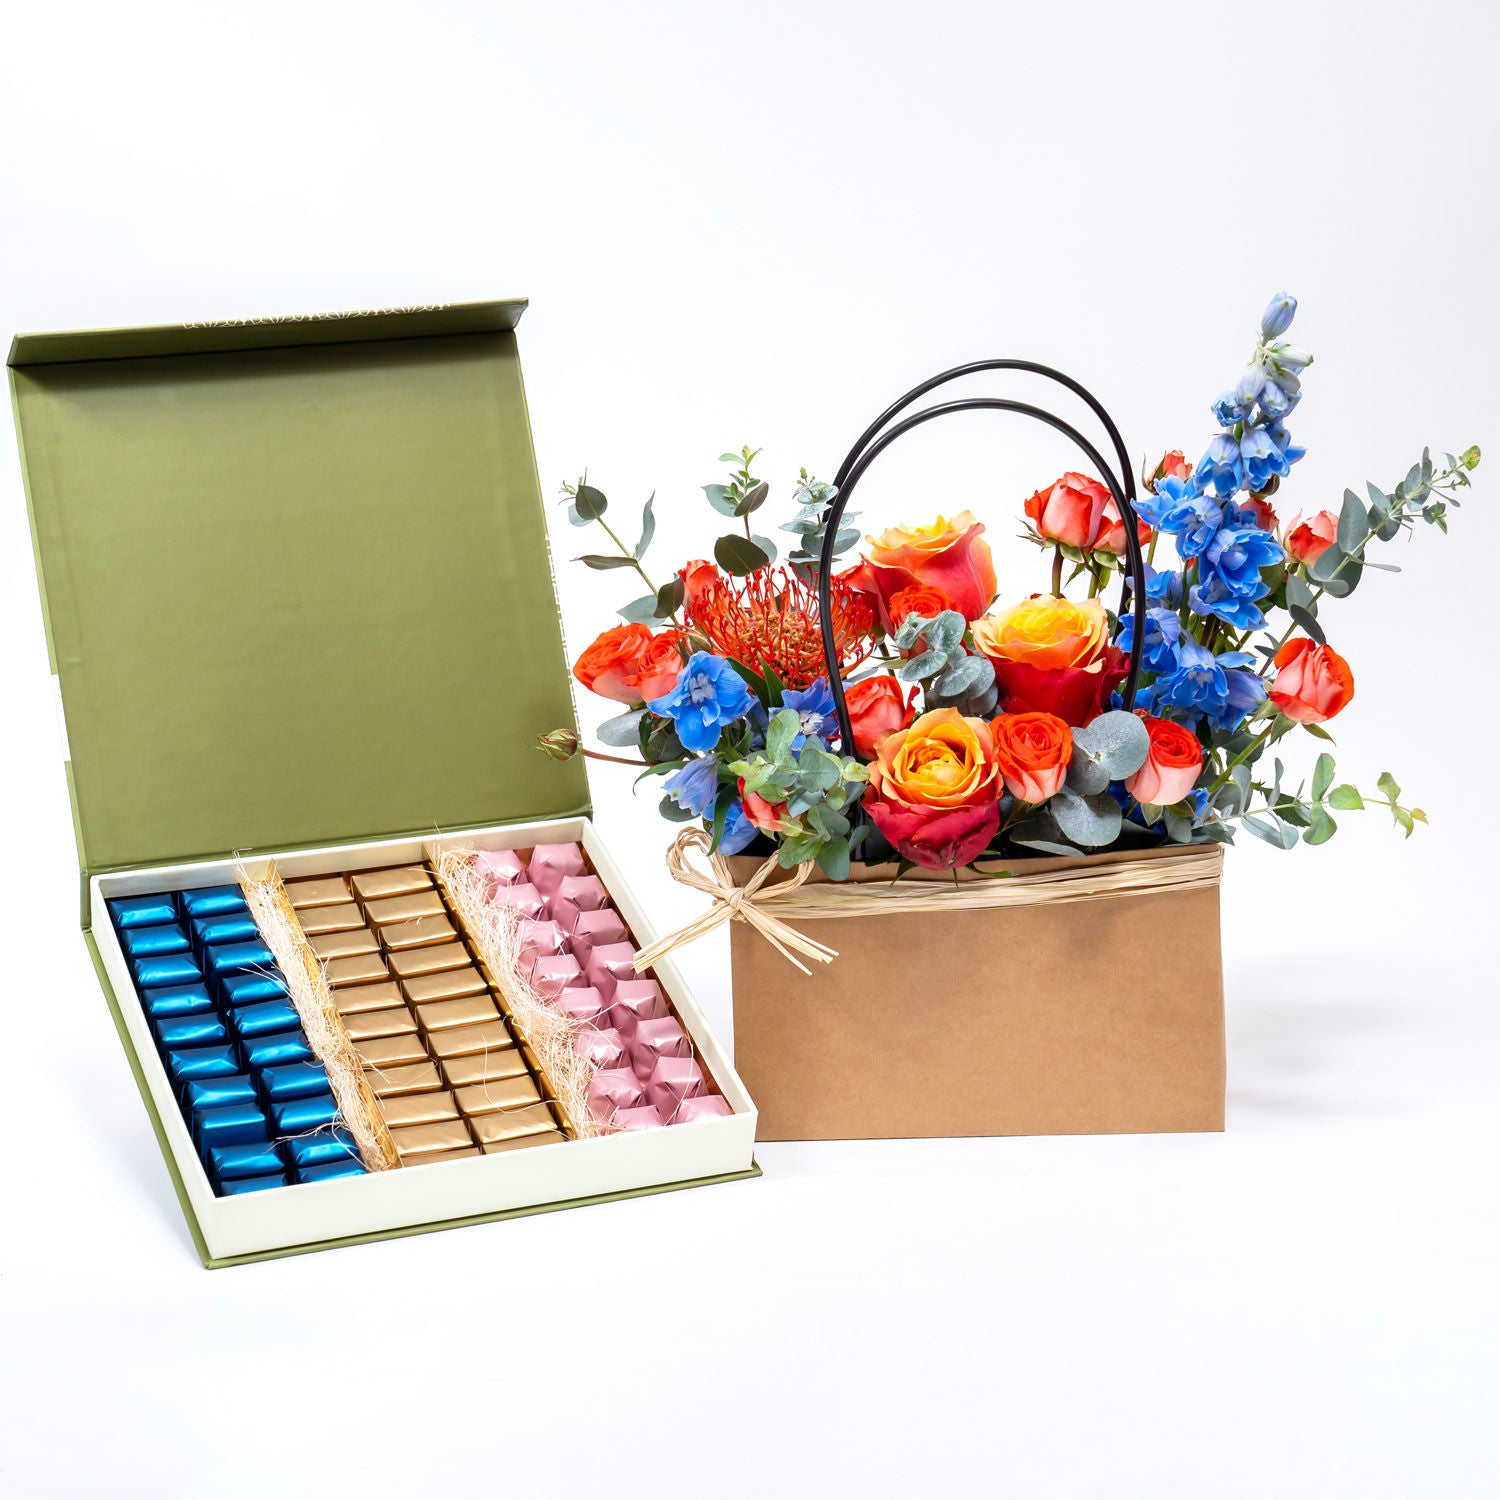 Flowers Arrangement with Chocolate Box